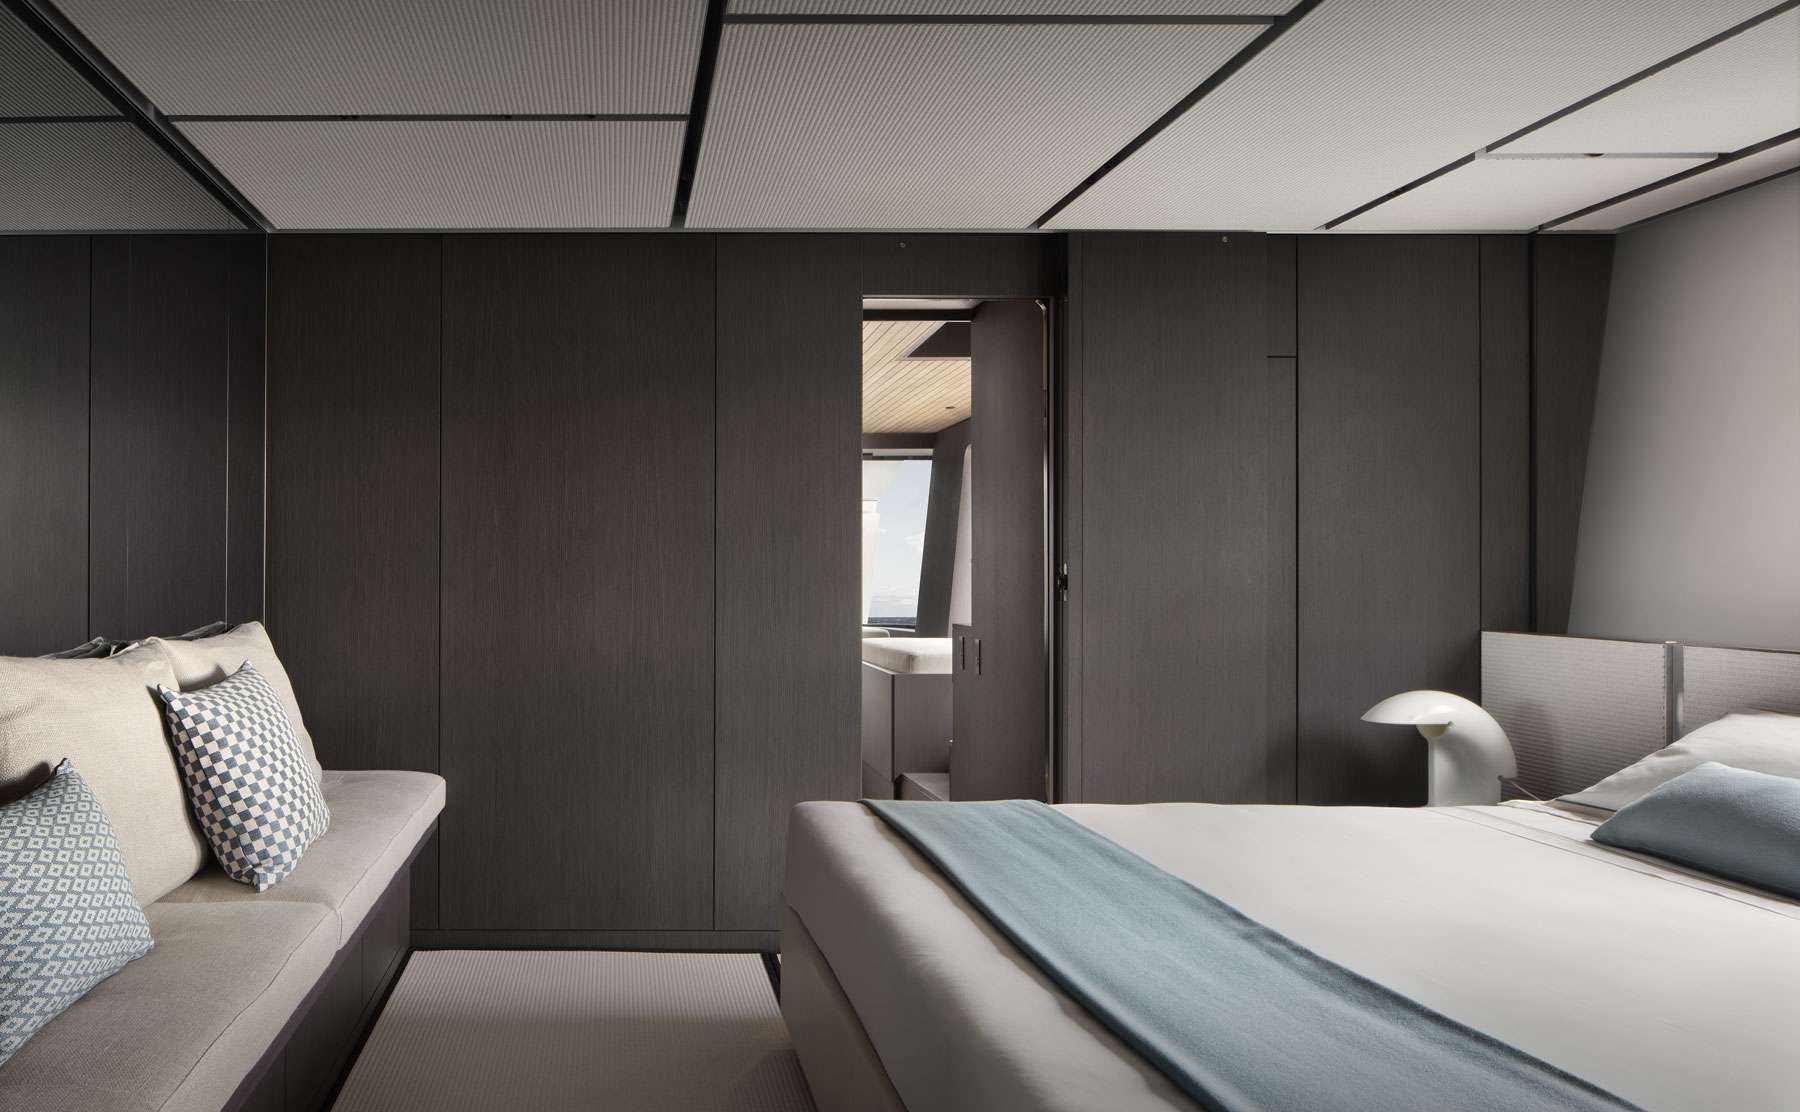 Almax luxury motor yacht charter UK luxury cabin - High Point Yachting